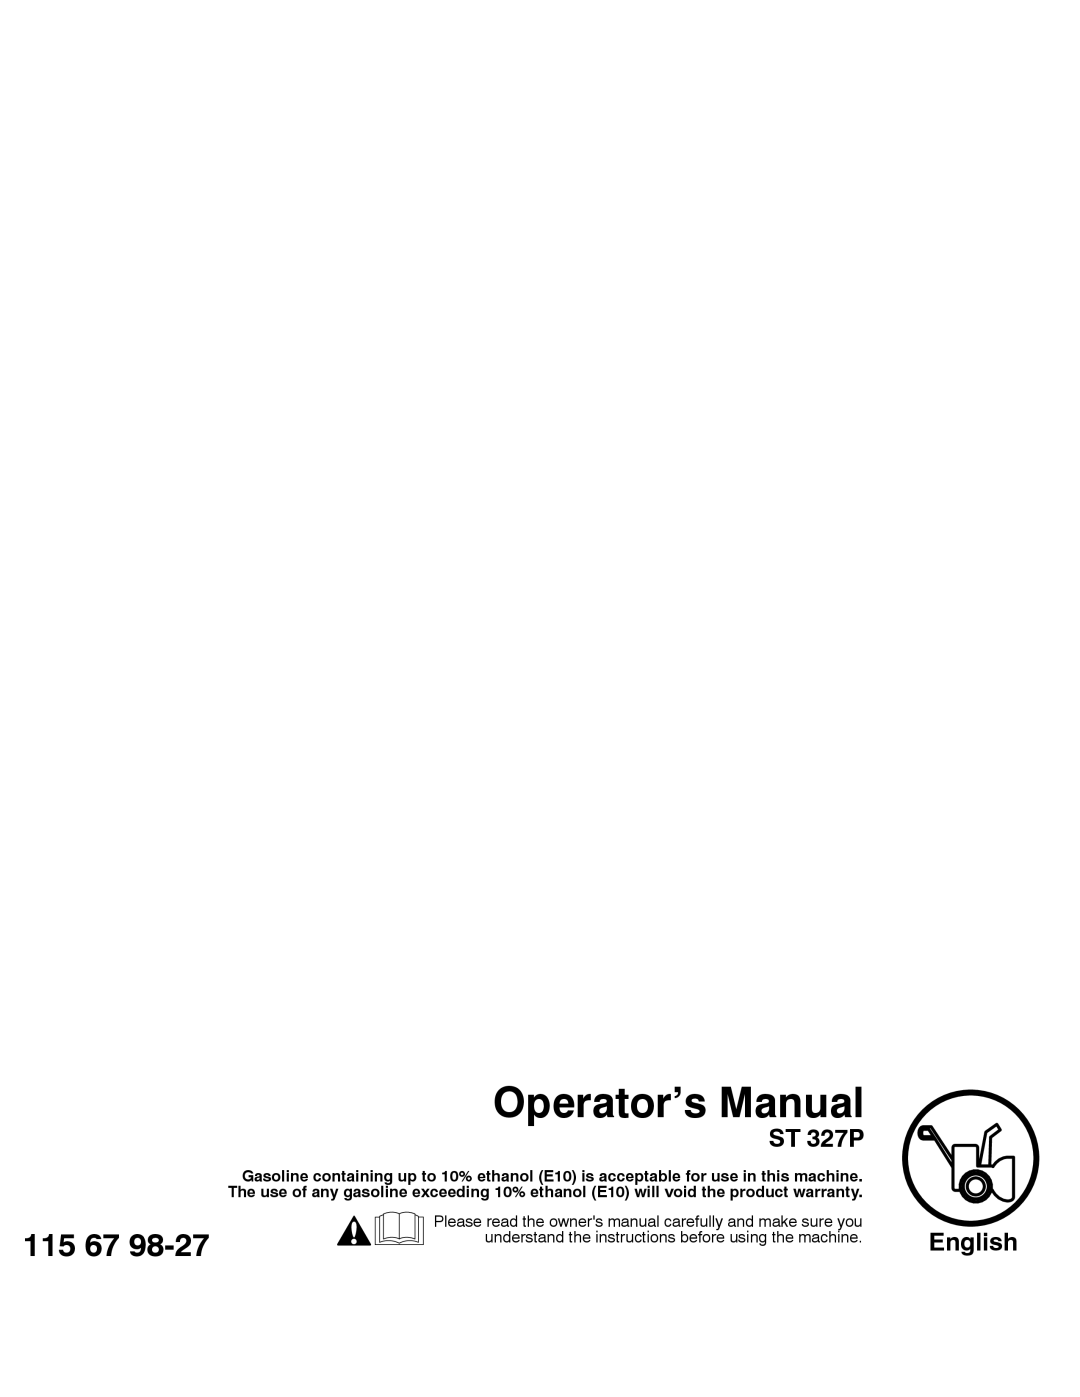 Husqvarna ST 327P warranty Operator’s Manual, English, 115 67 